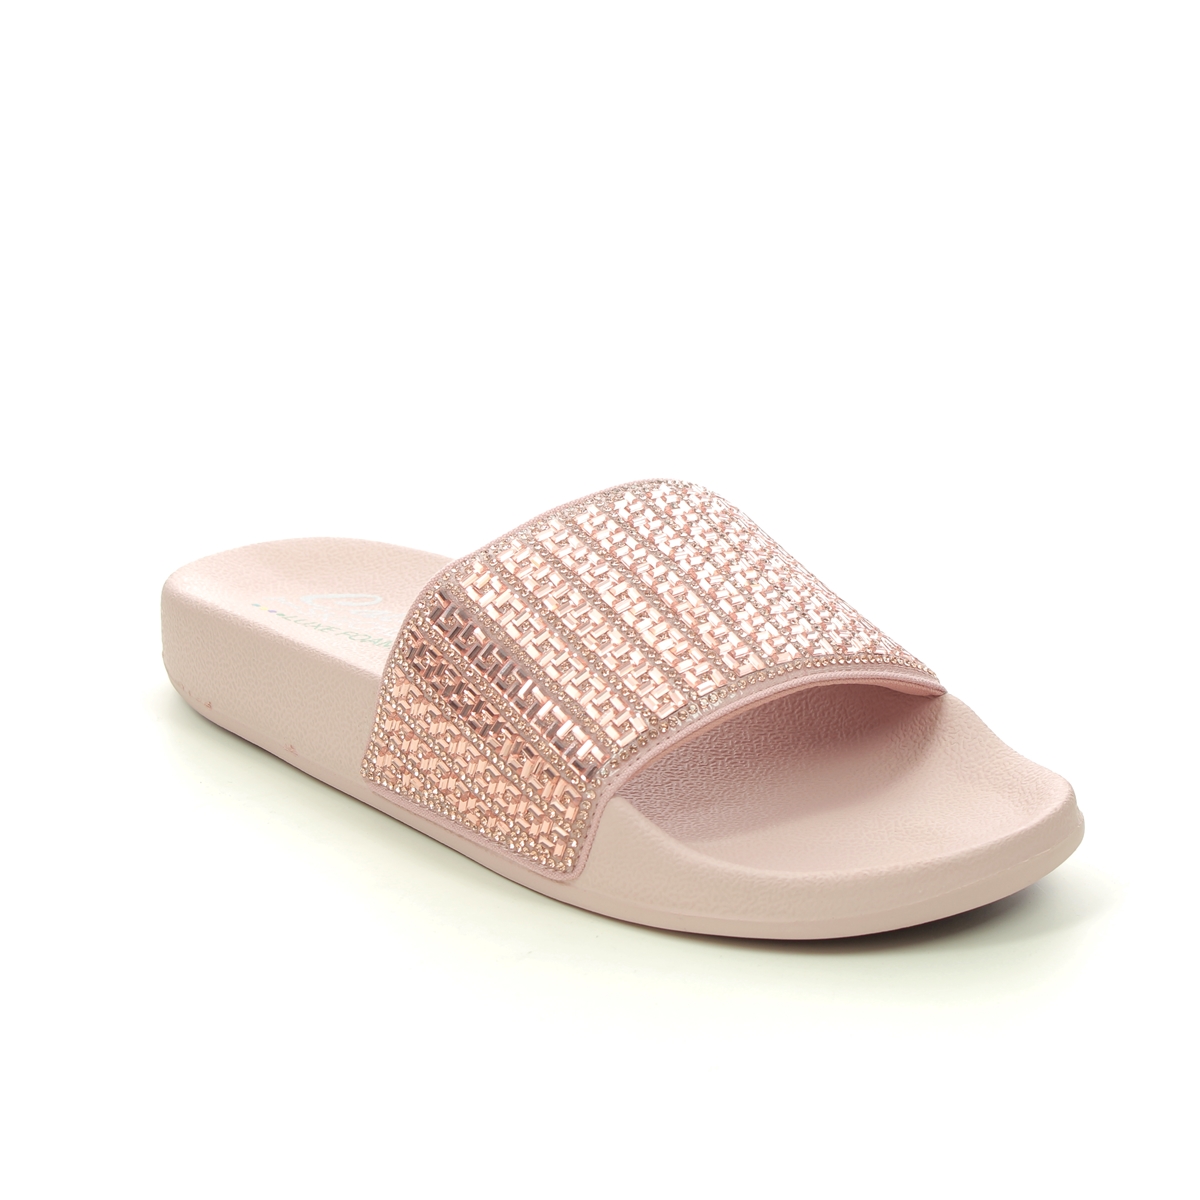 Skechers Pop Ups Cali RSGD Rose gold Womens Slide Sandals in a Plain Man-made in Size 4